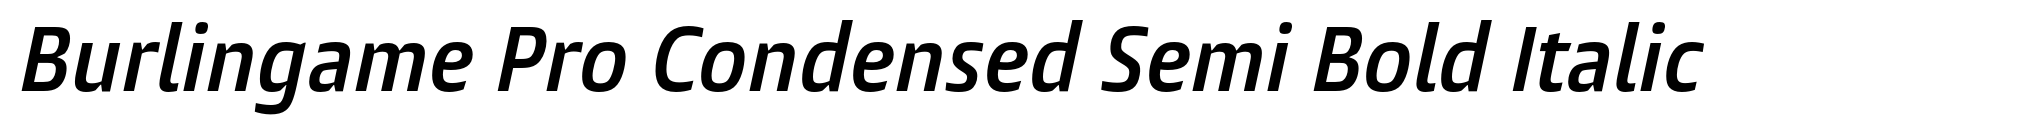 Burlingame Pro Condensed Semi Bold Italic image